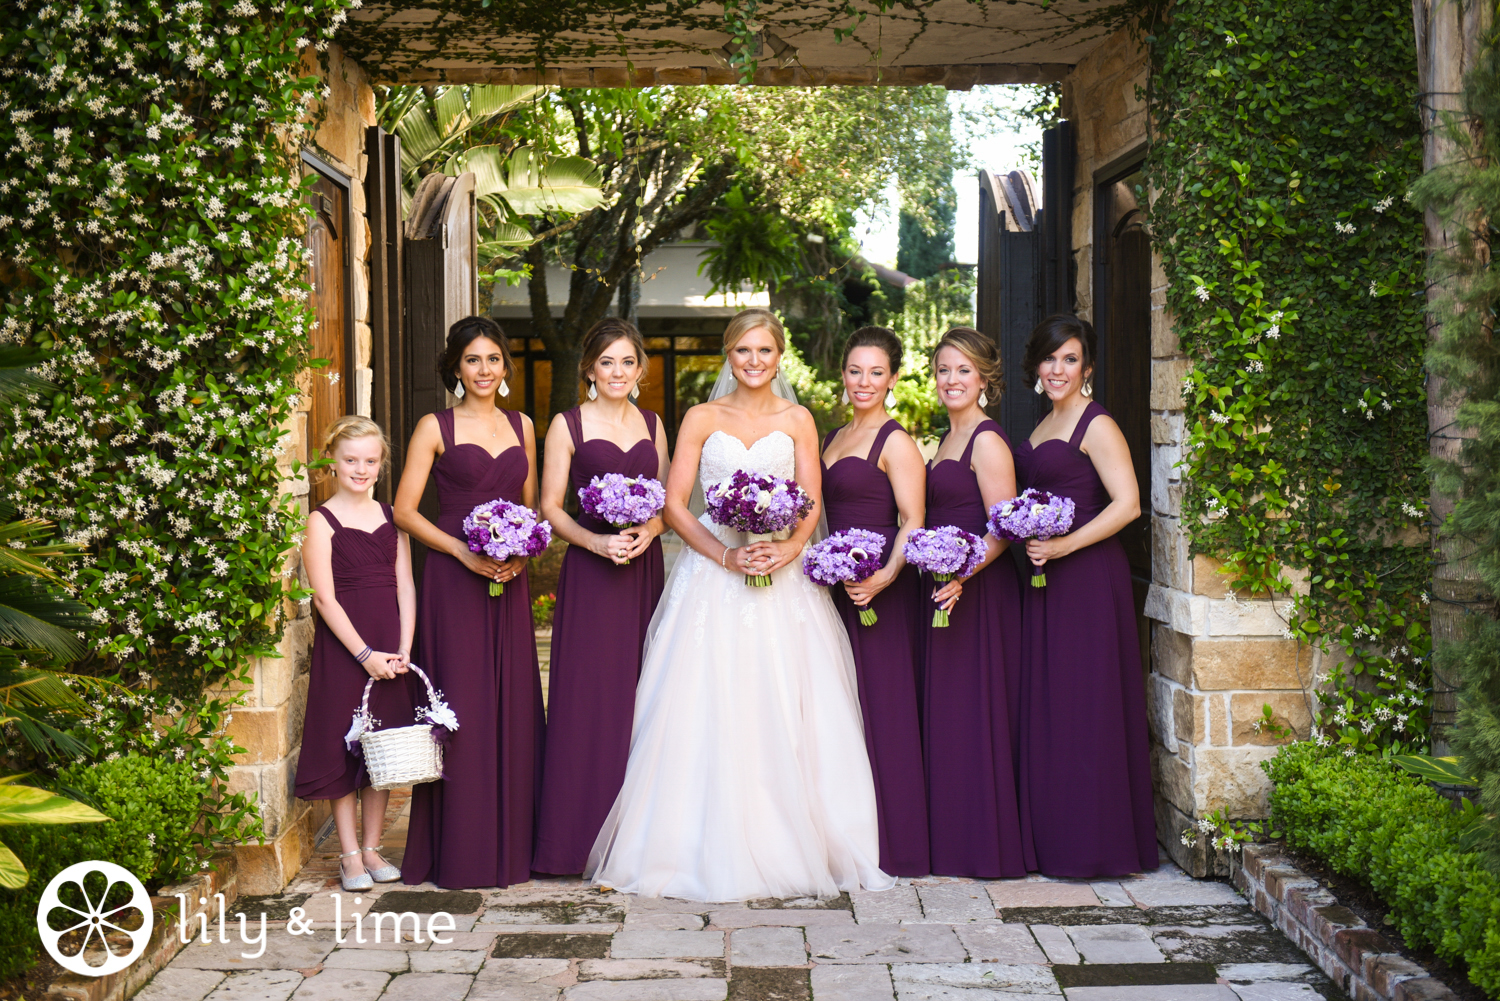 plum bridesmaids dresses matching